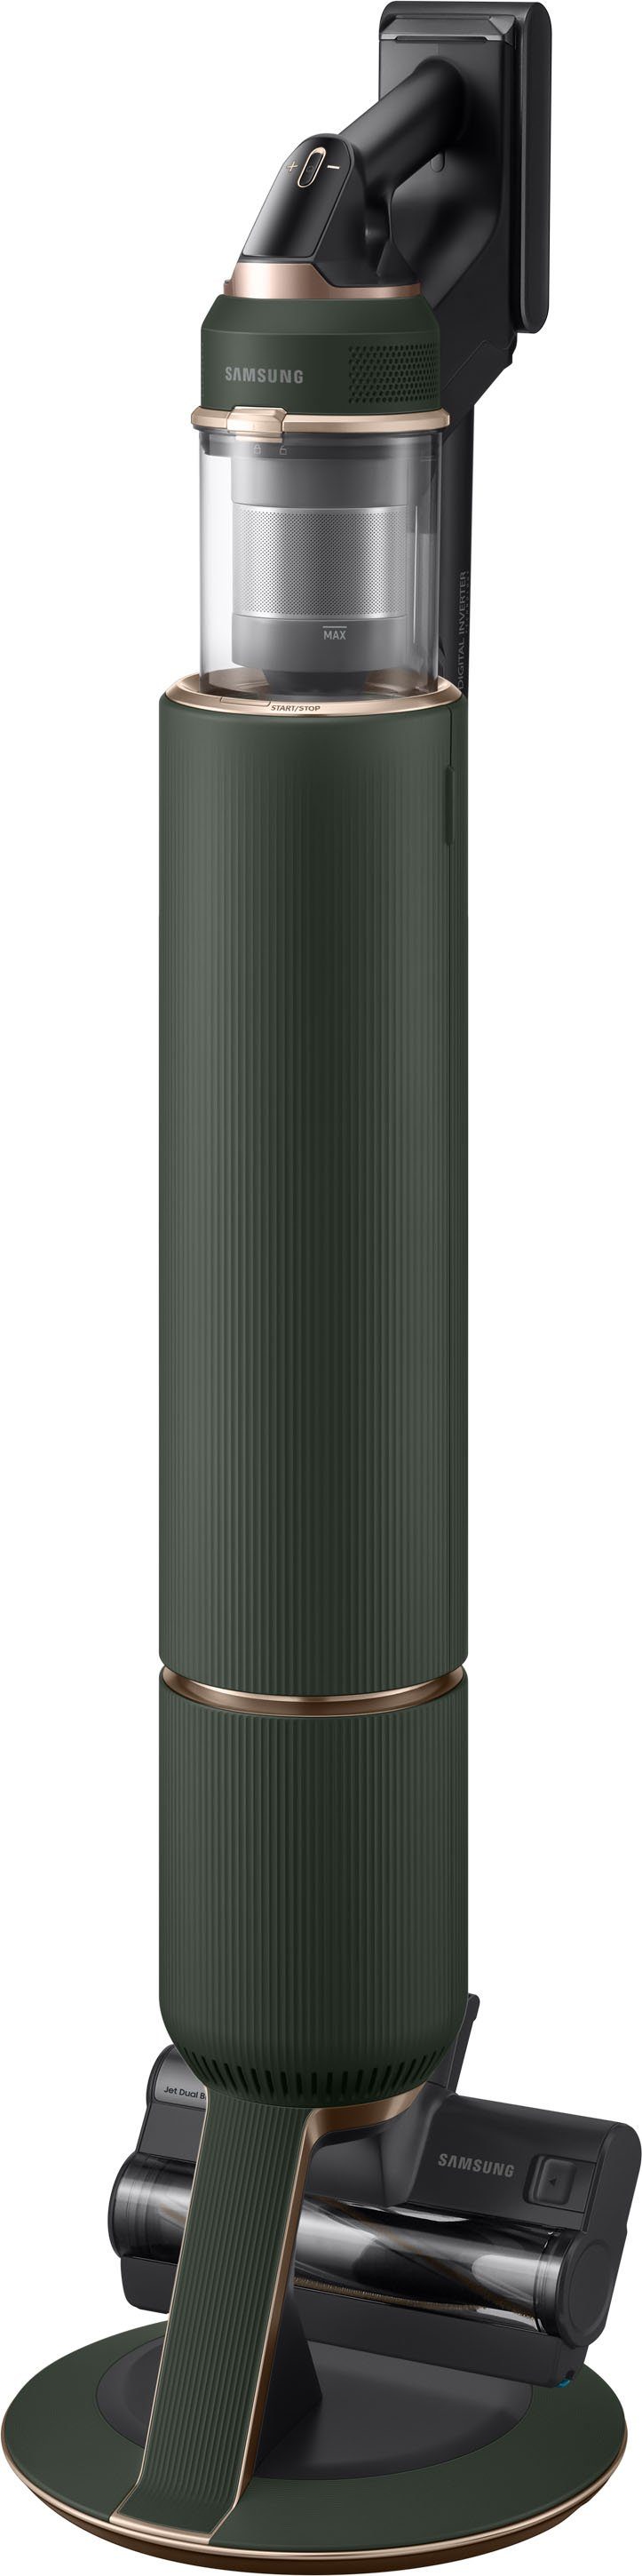 Samsung Akku-Bodenstaubsauger 580 Jet grün, VS20A95943N/WA, W, extra complete beutellos BESPOKE